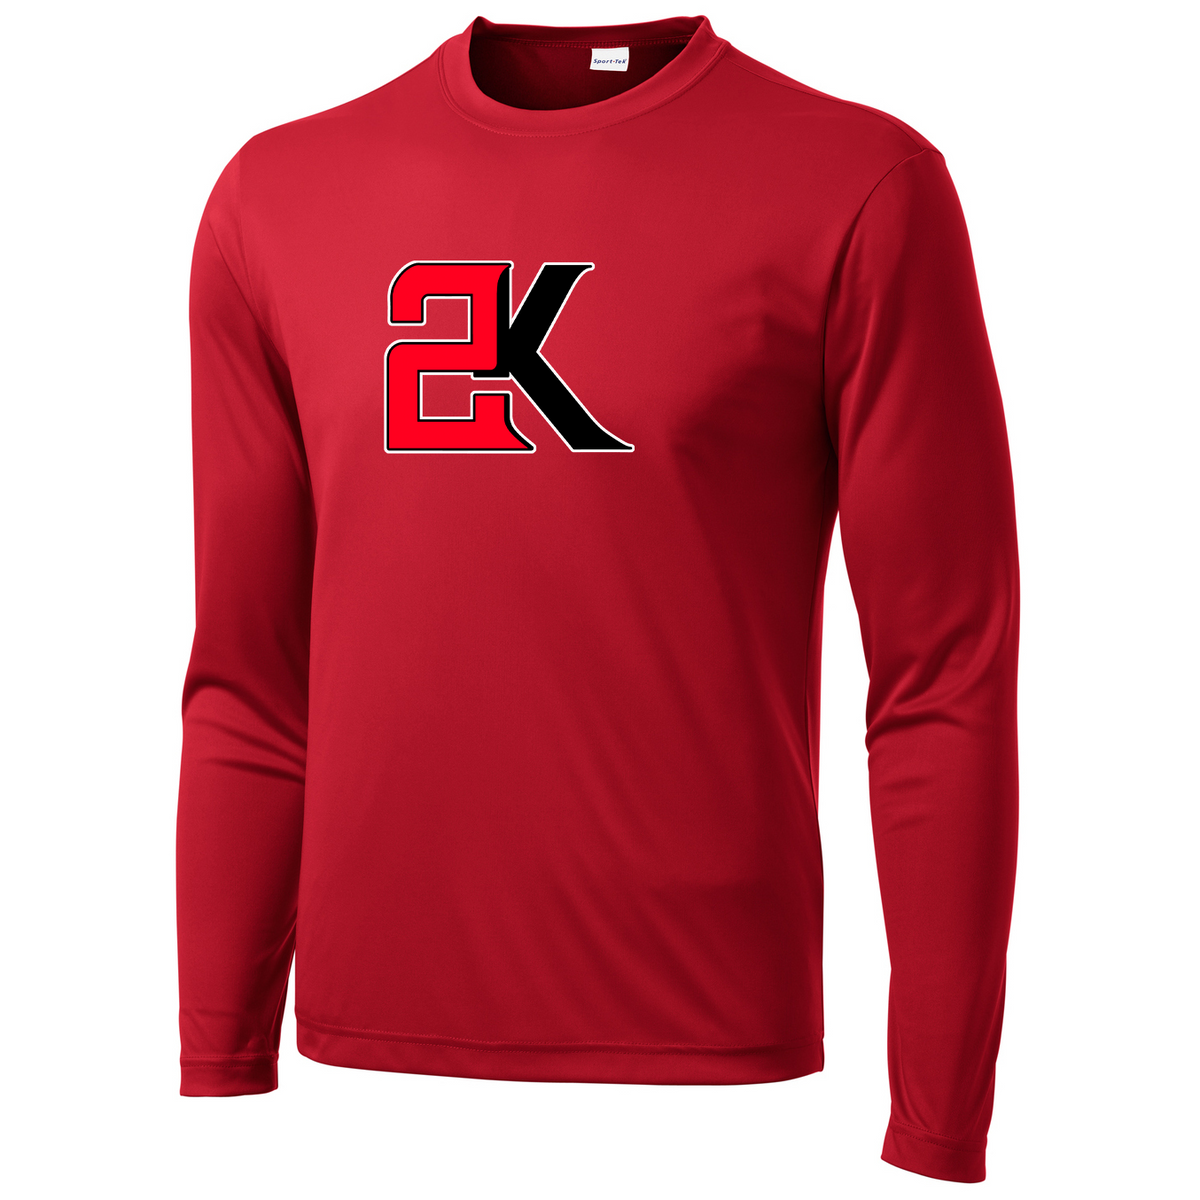 2K Softball Long Sleeve Performance Shirt